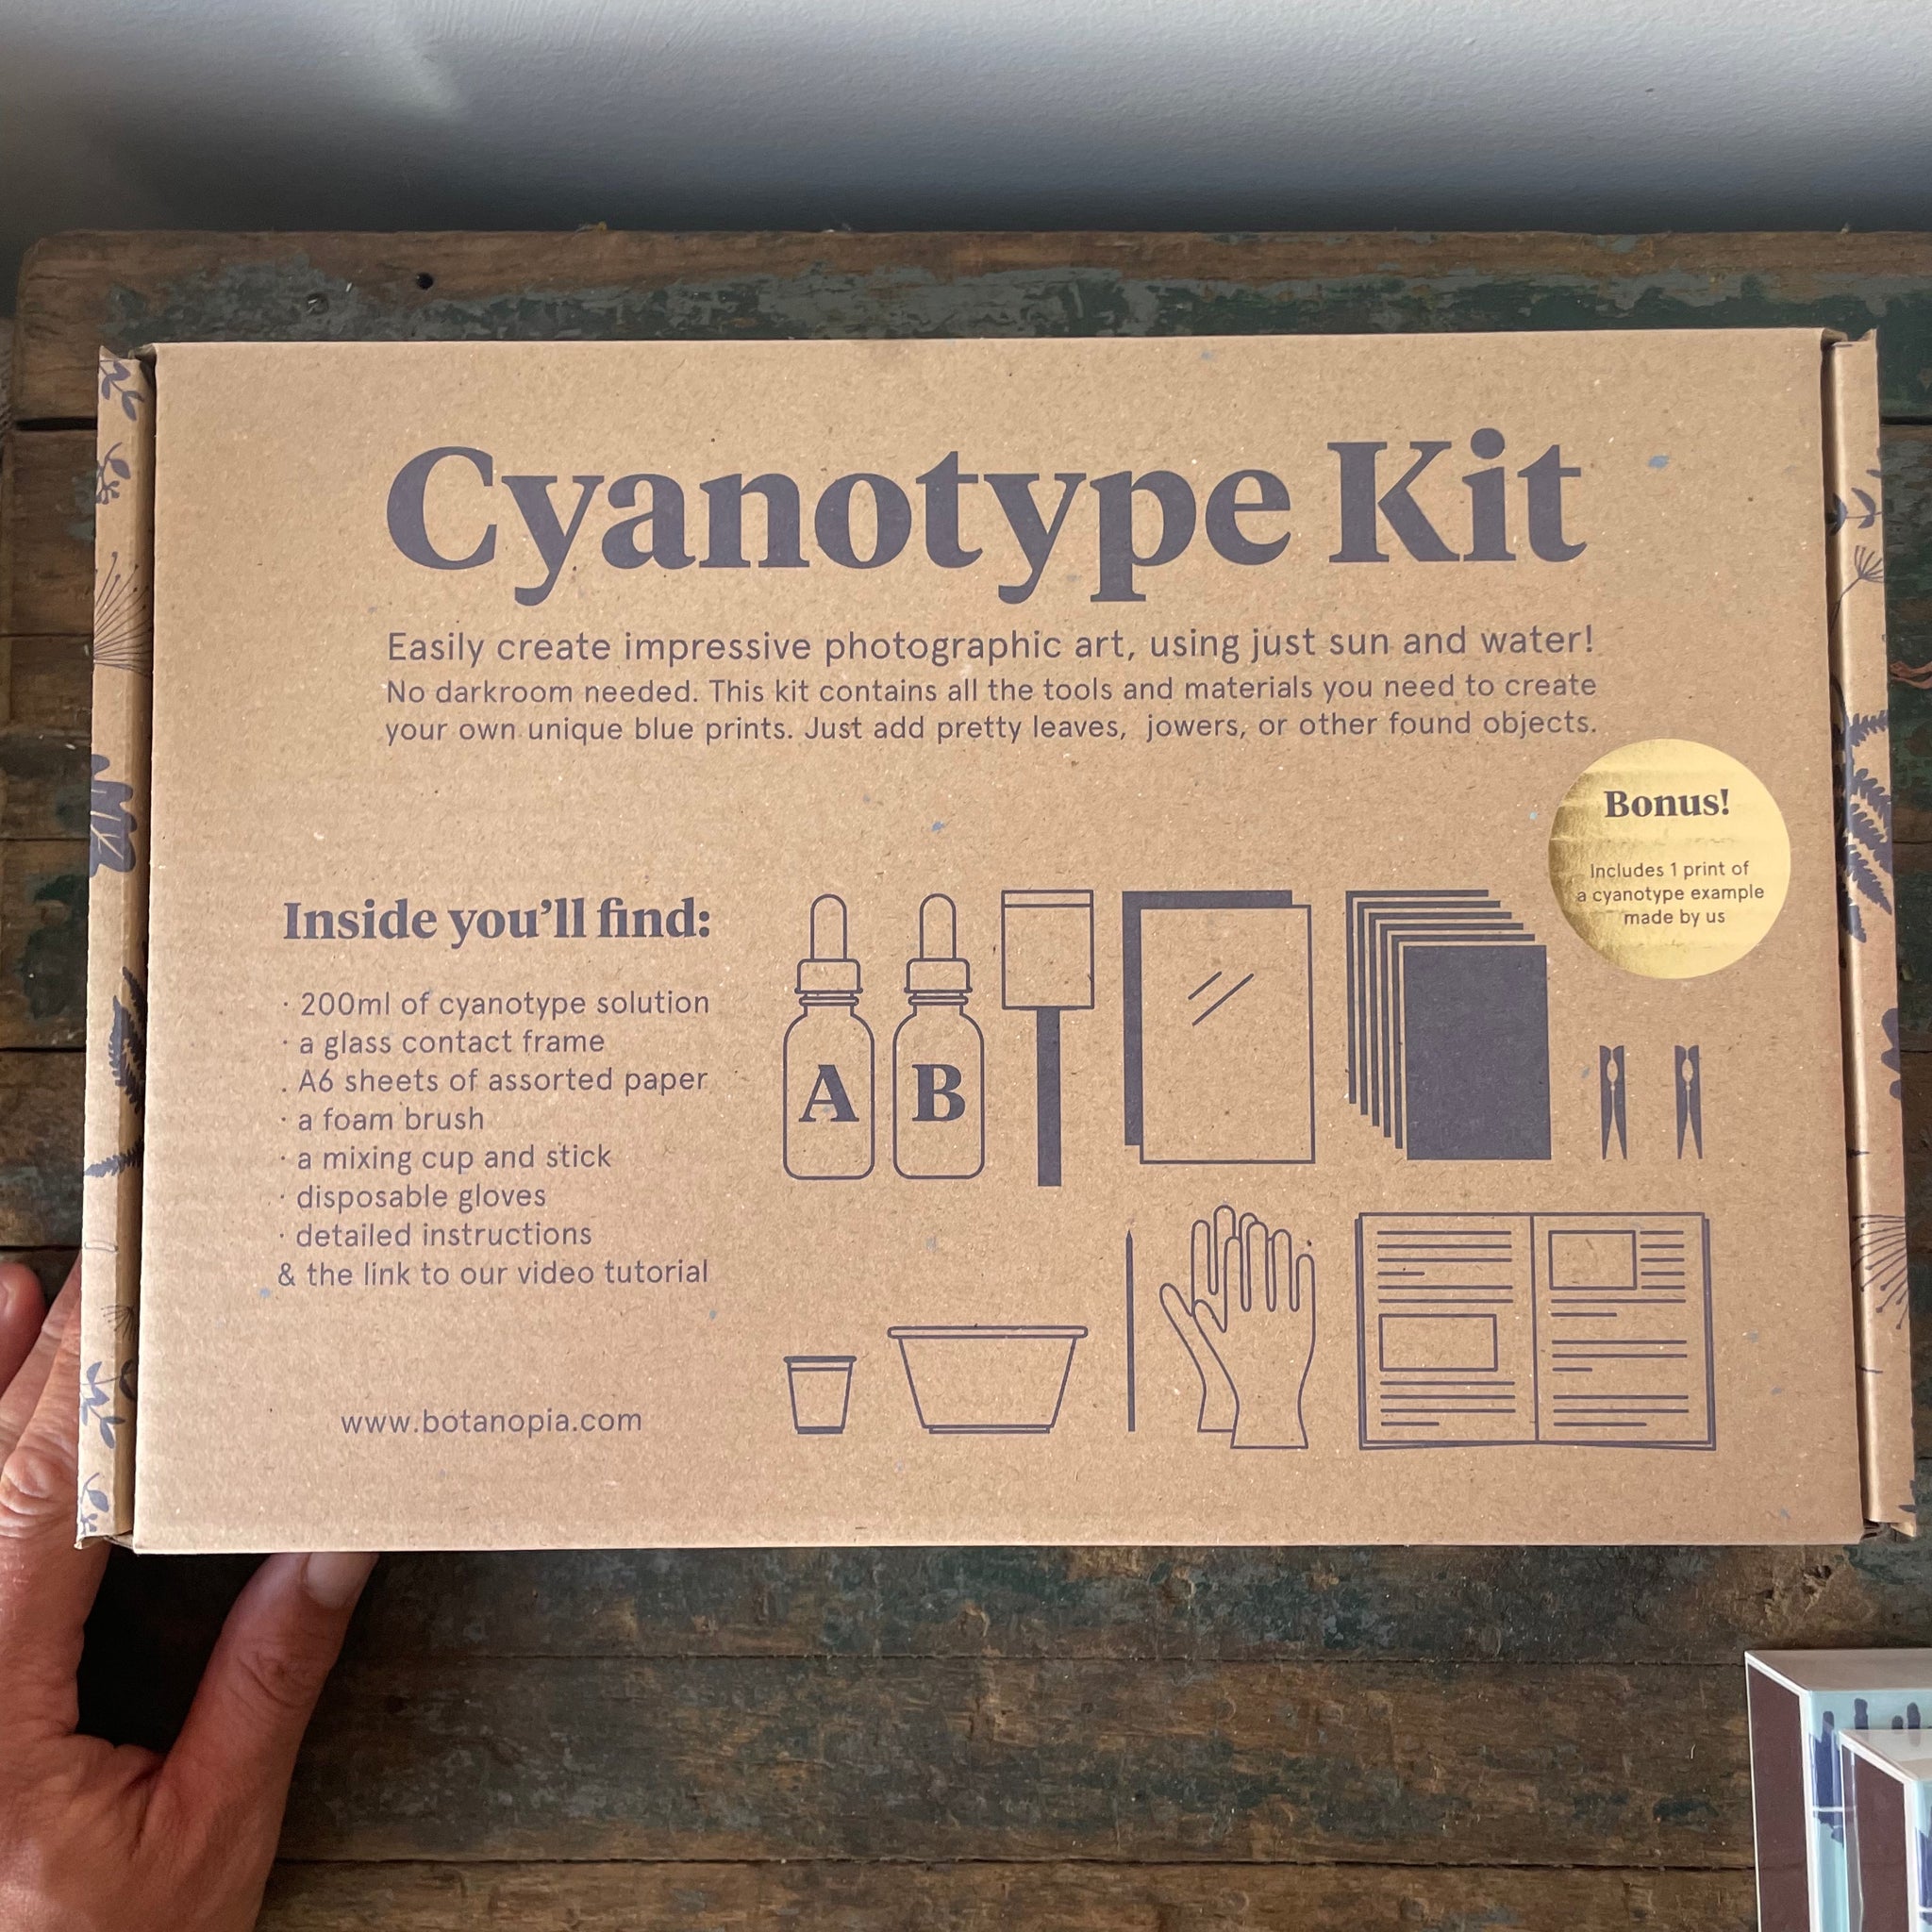 Cyanotype Kit by Botanopia